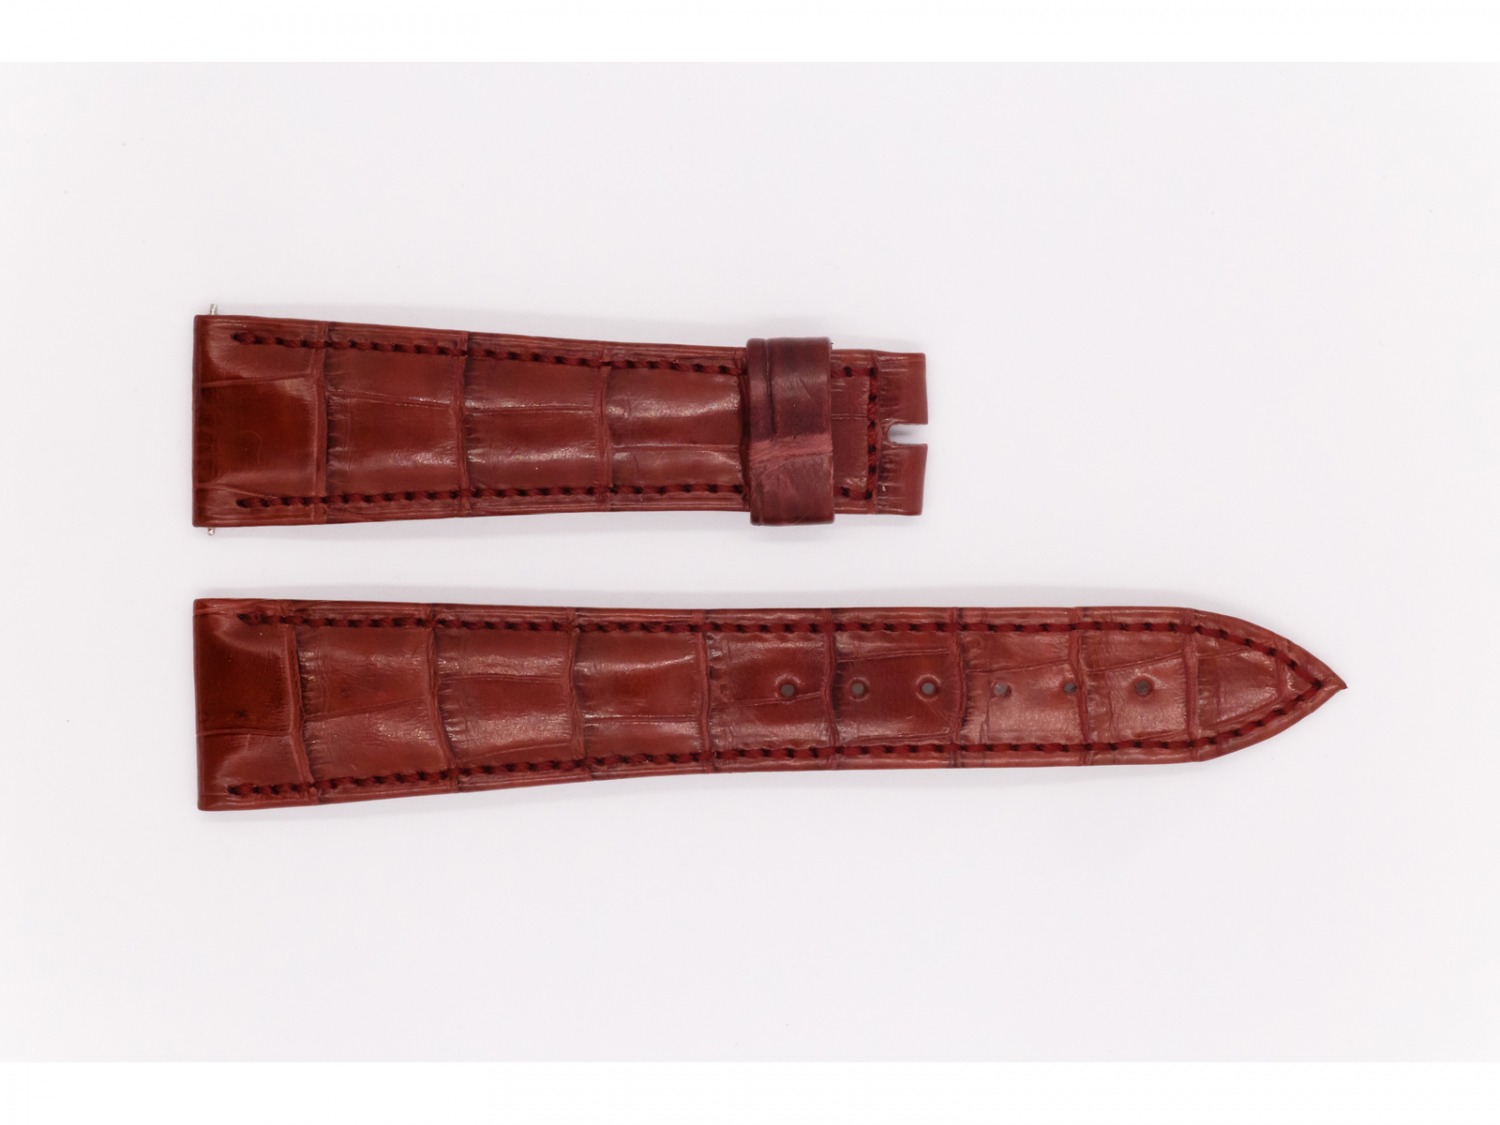 Crocodile Leather Breguet Strap, Cousu Main, light brown